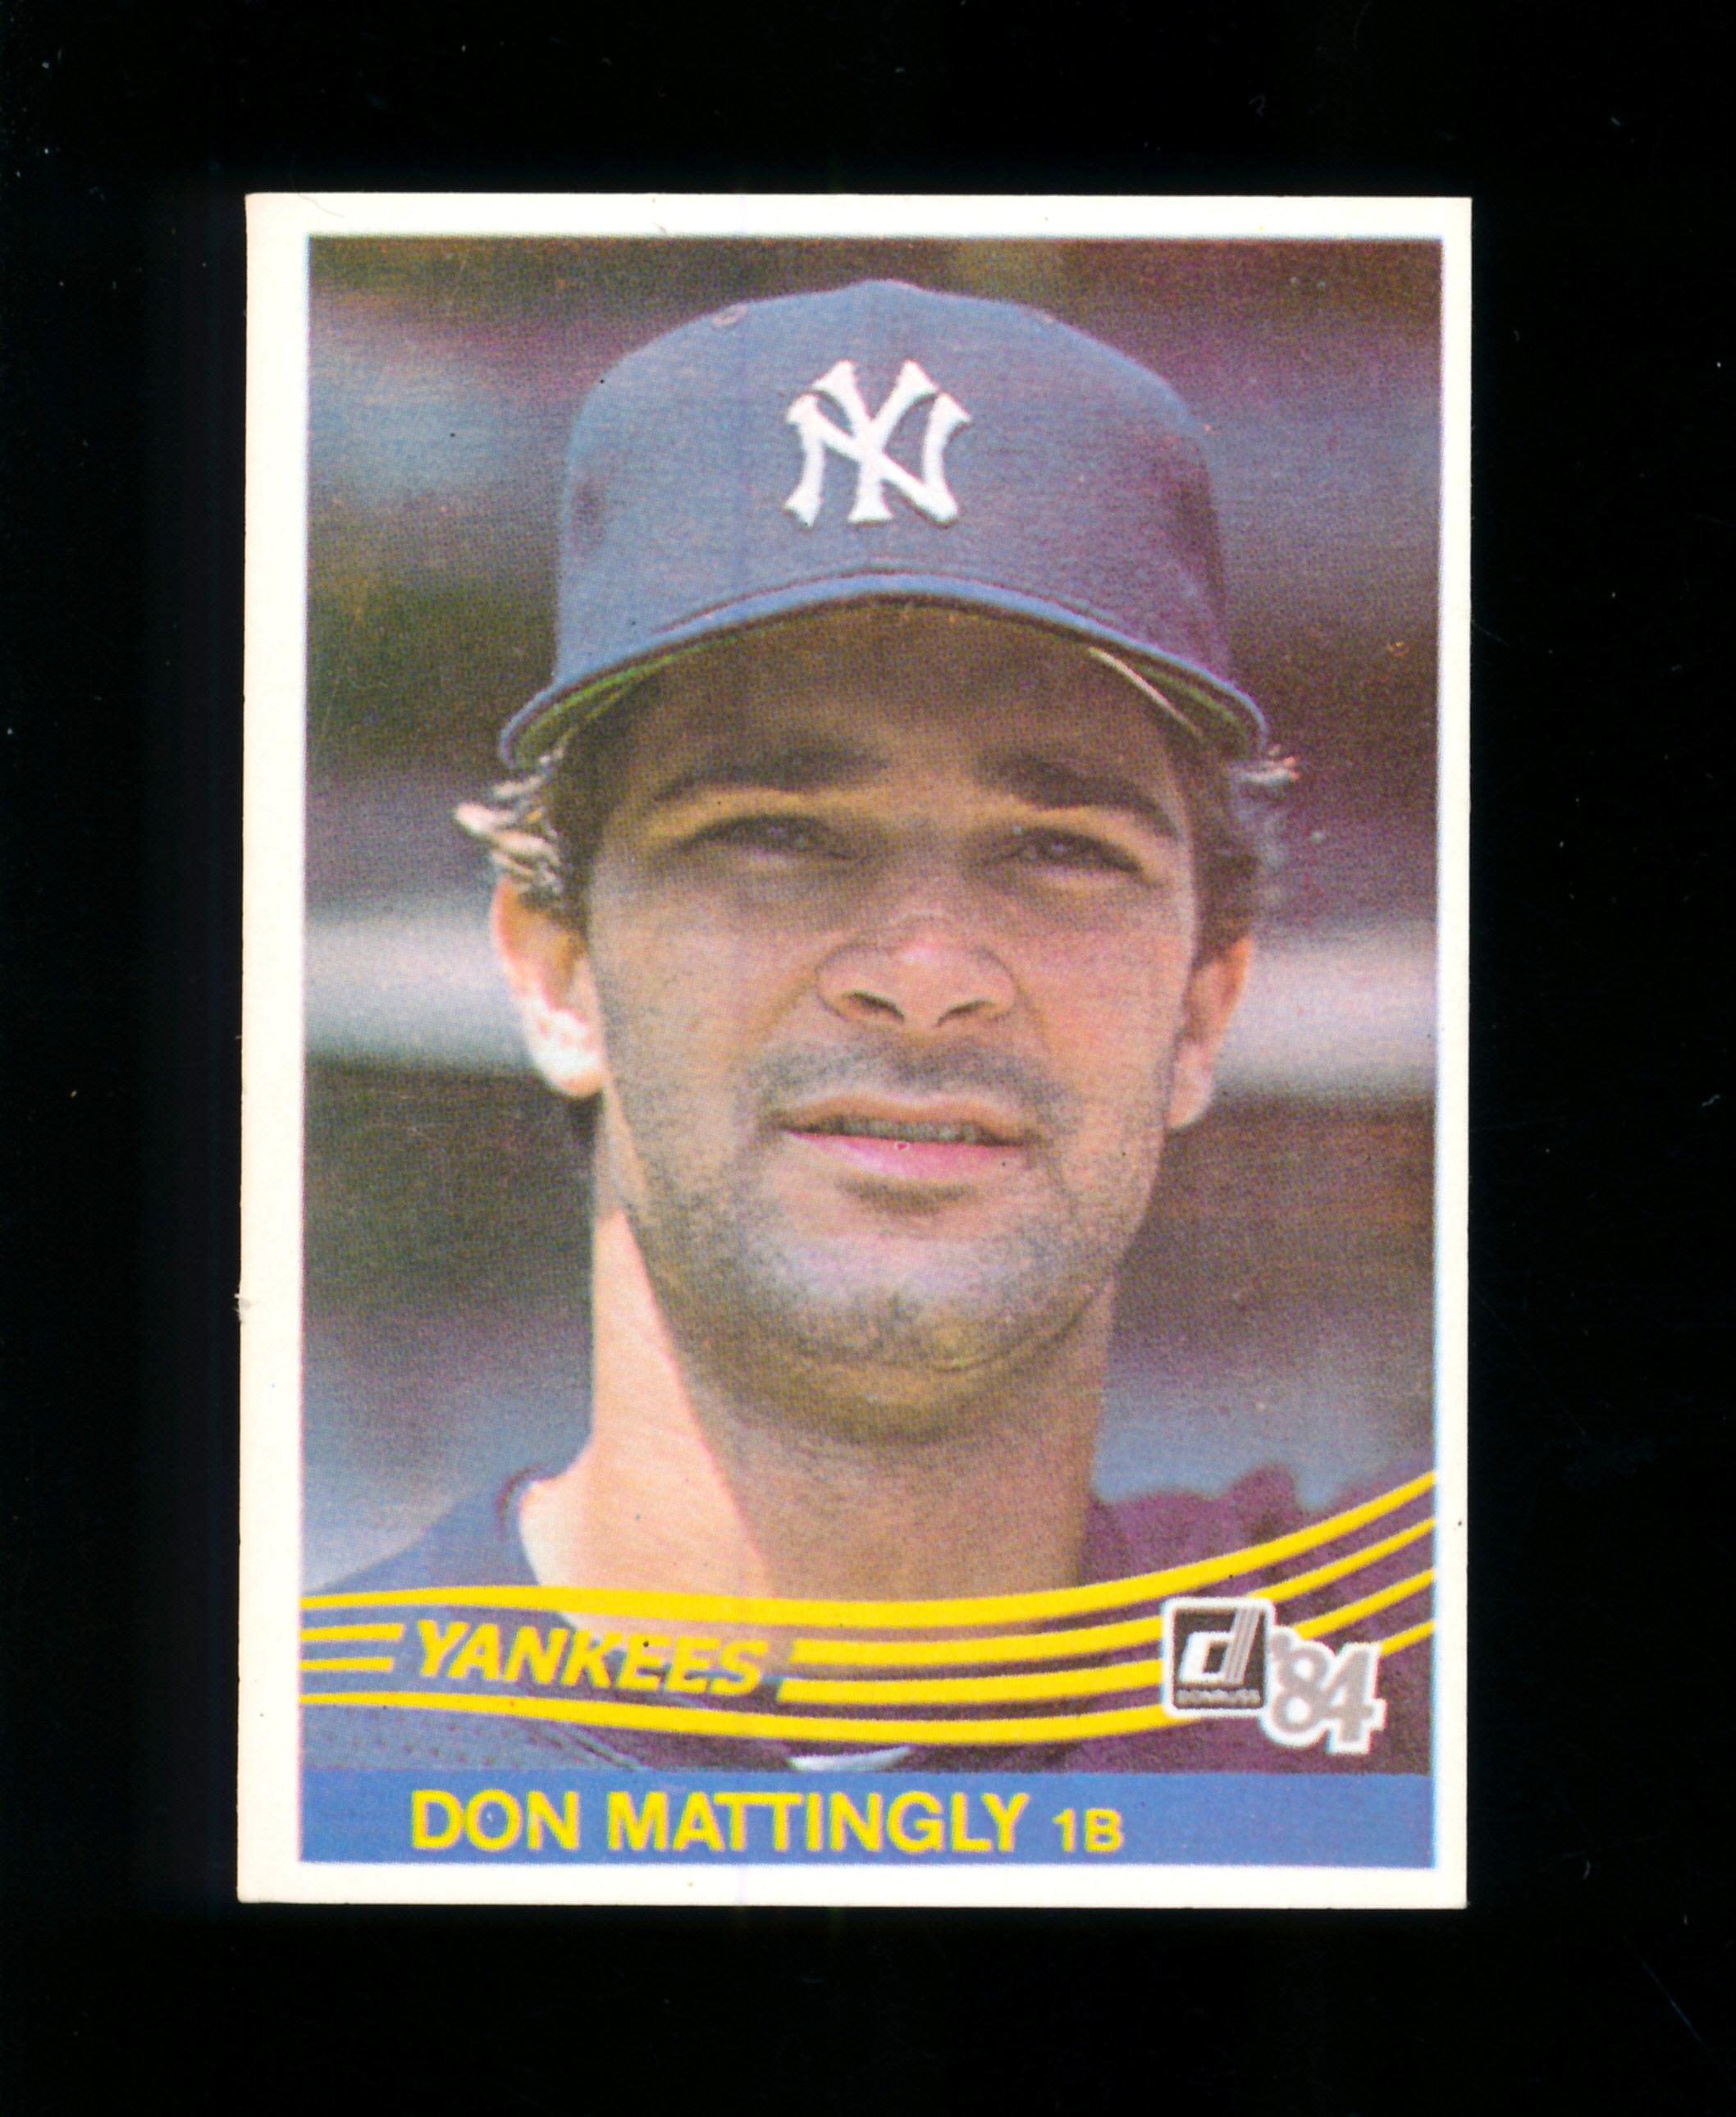 1984 Donruss ROOKIE Baseball Card #248 Rookie Hall of Fame. Don Mattingly N